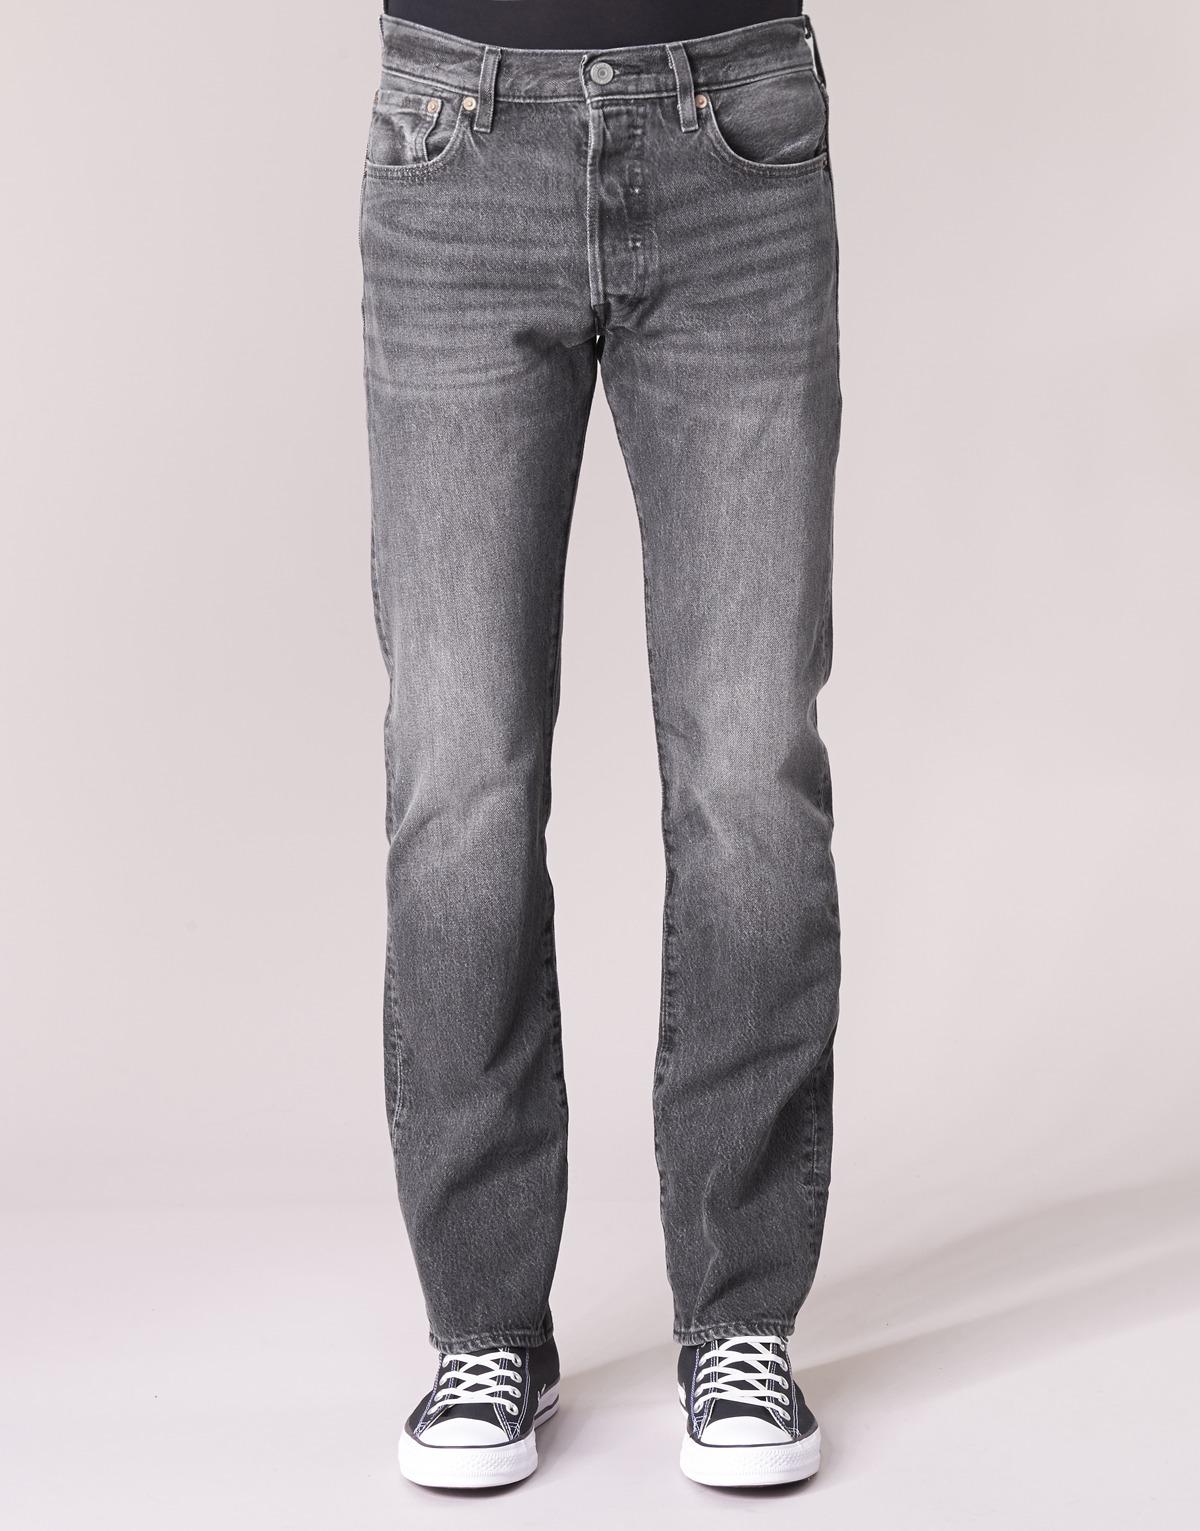 Levi's Denim 501 Levi's Original Fit Jeans in Grey (Grey) for Men - Lyst